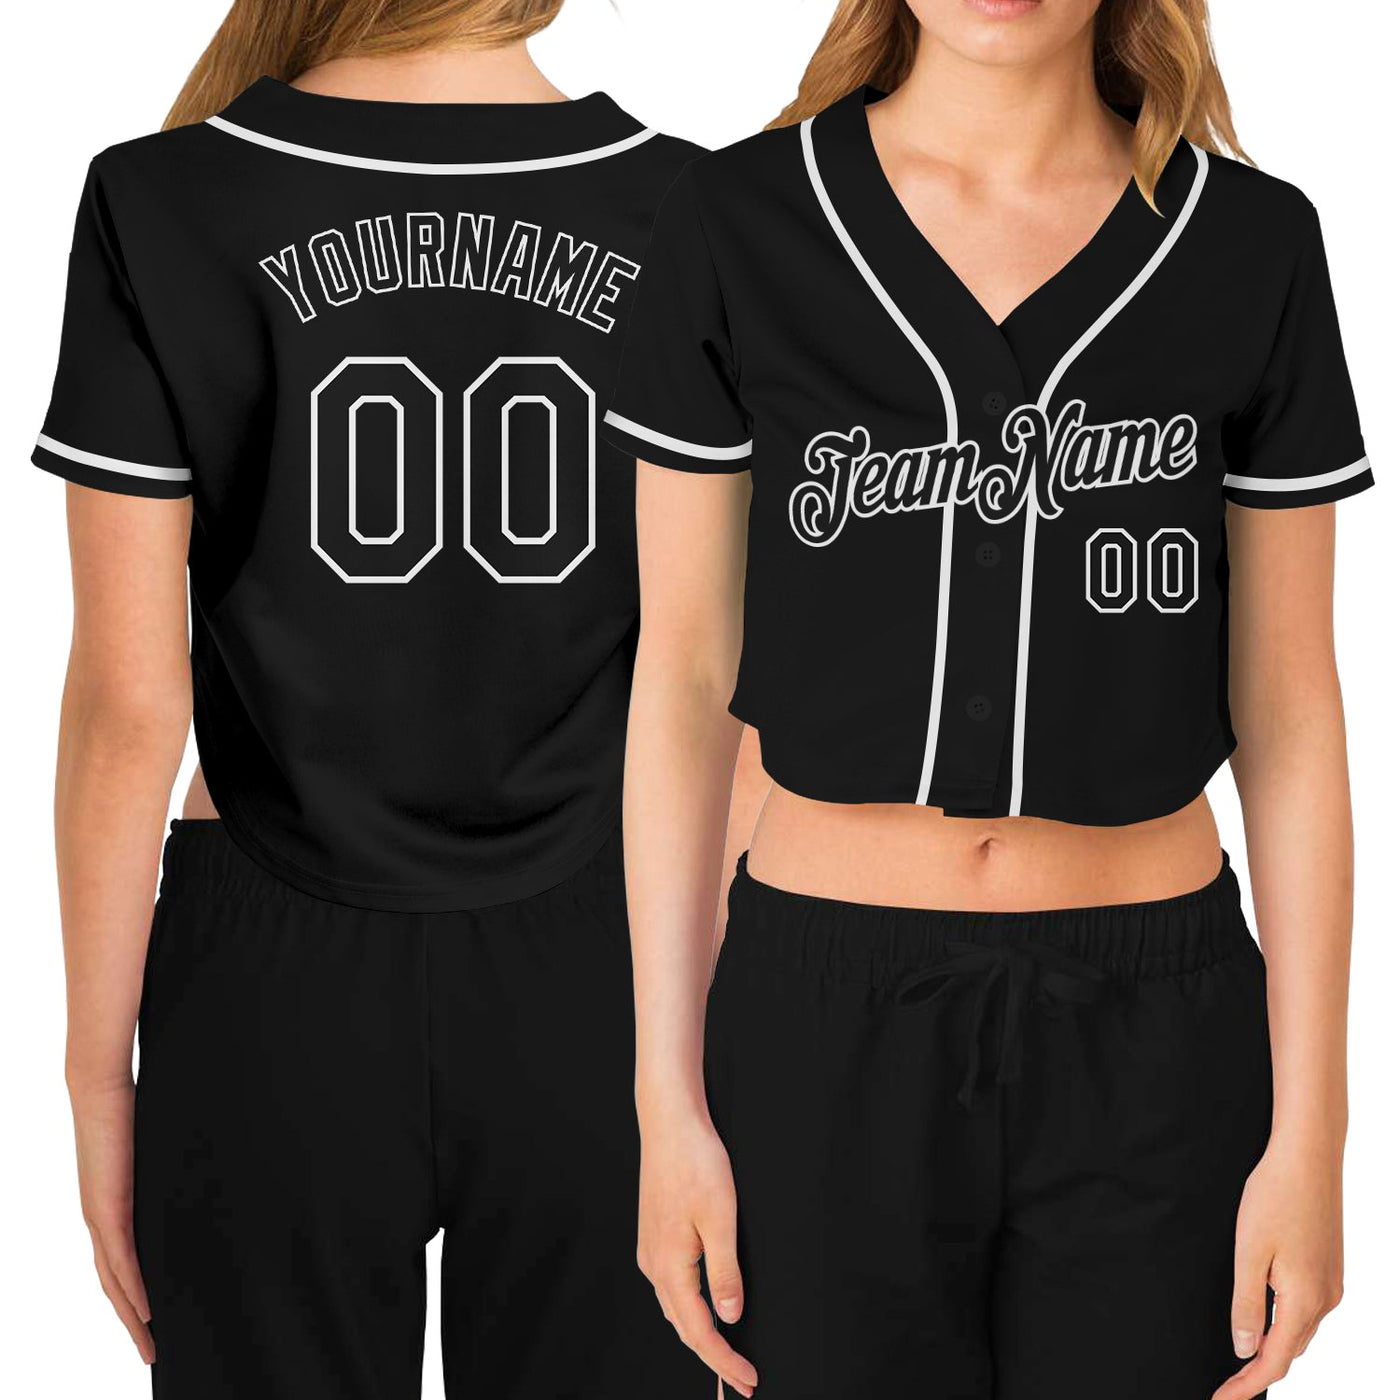 Custom Women's Black Black-White V-Neck Cropped Baseball Jersey - Owls Matrix LTD